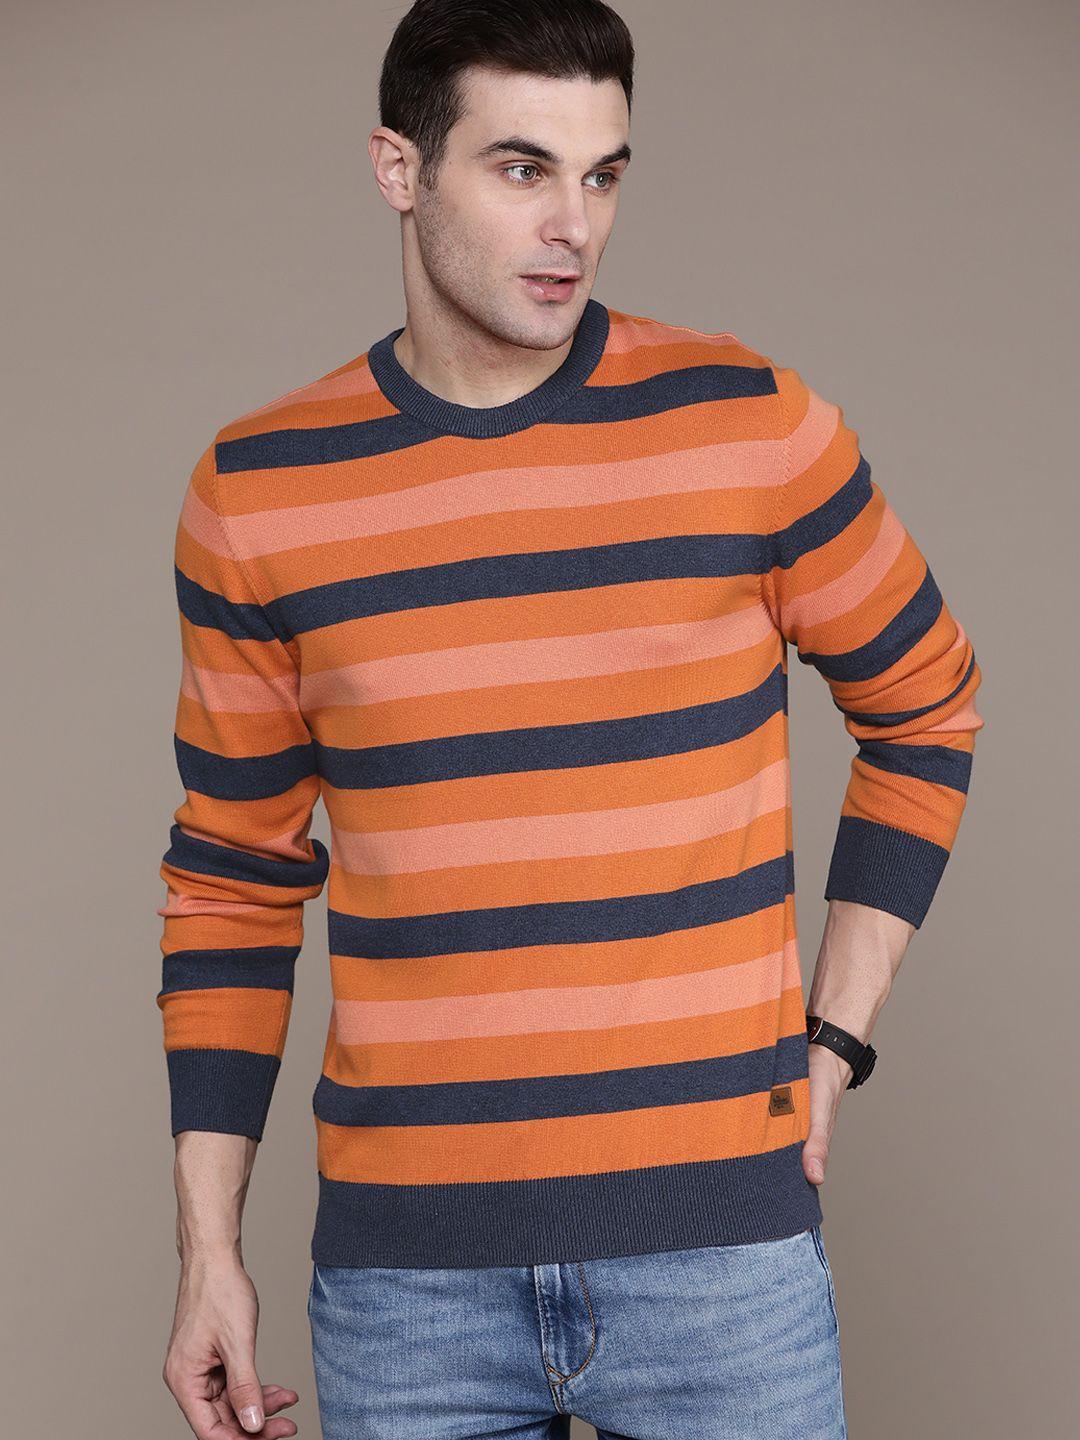 roadster-men-striped-cotton-sweater-vest